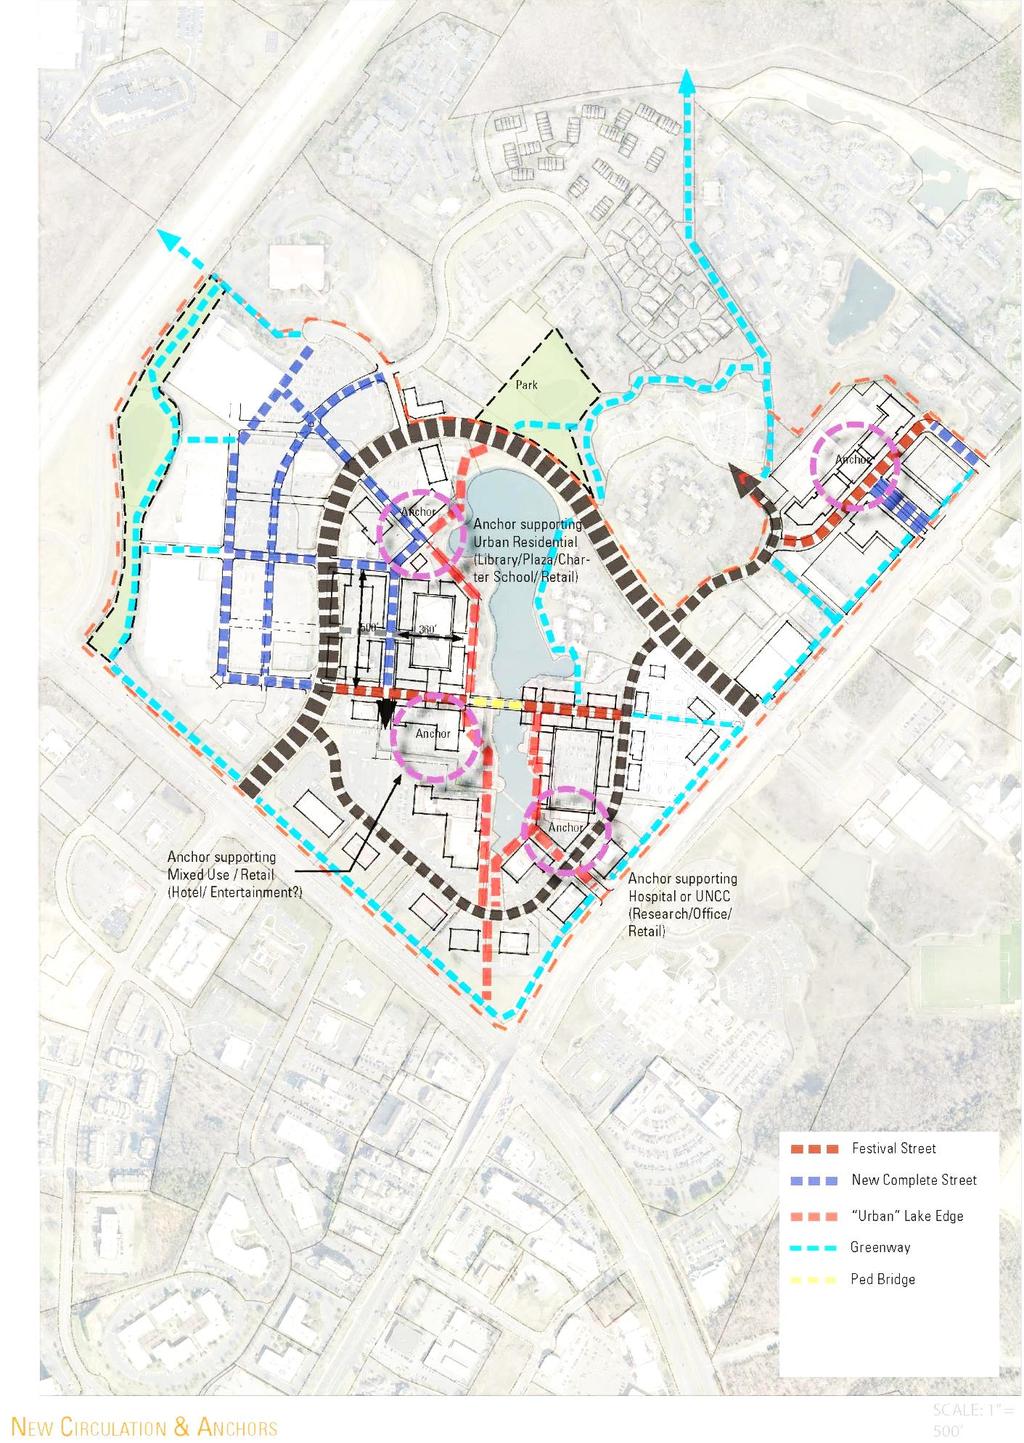 Circulation Improvements TRANSFORM SUBURBAN to URBAN - Transform existing major street